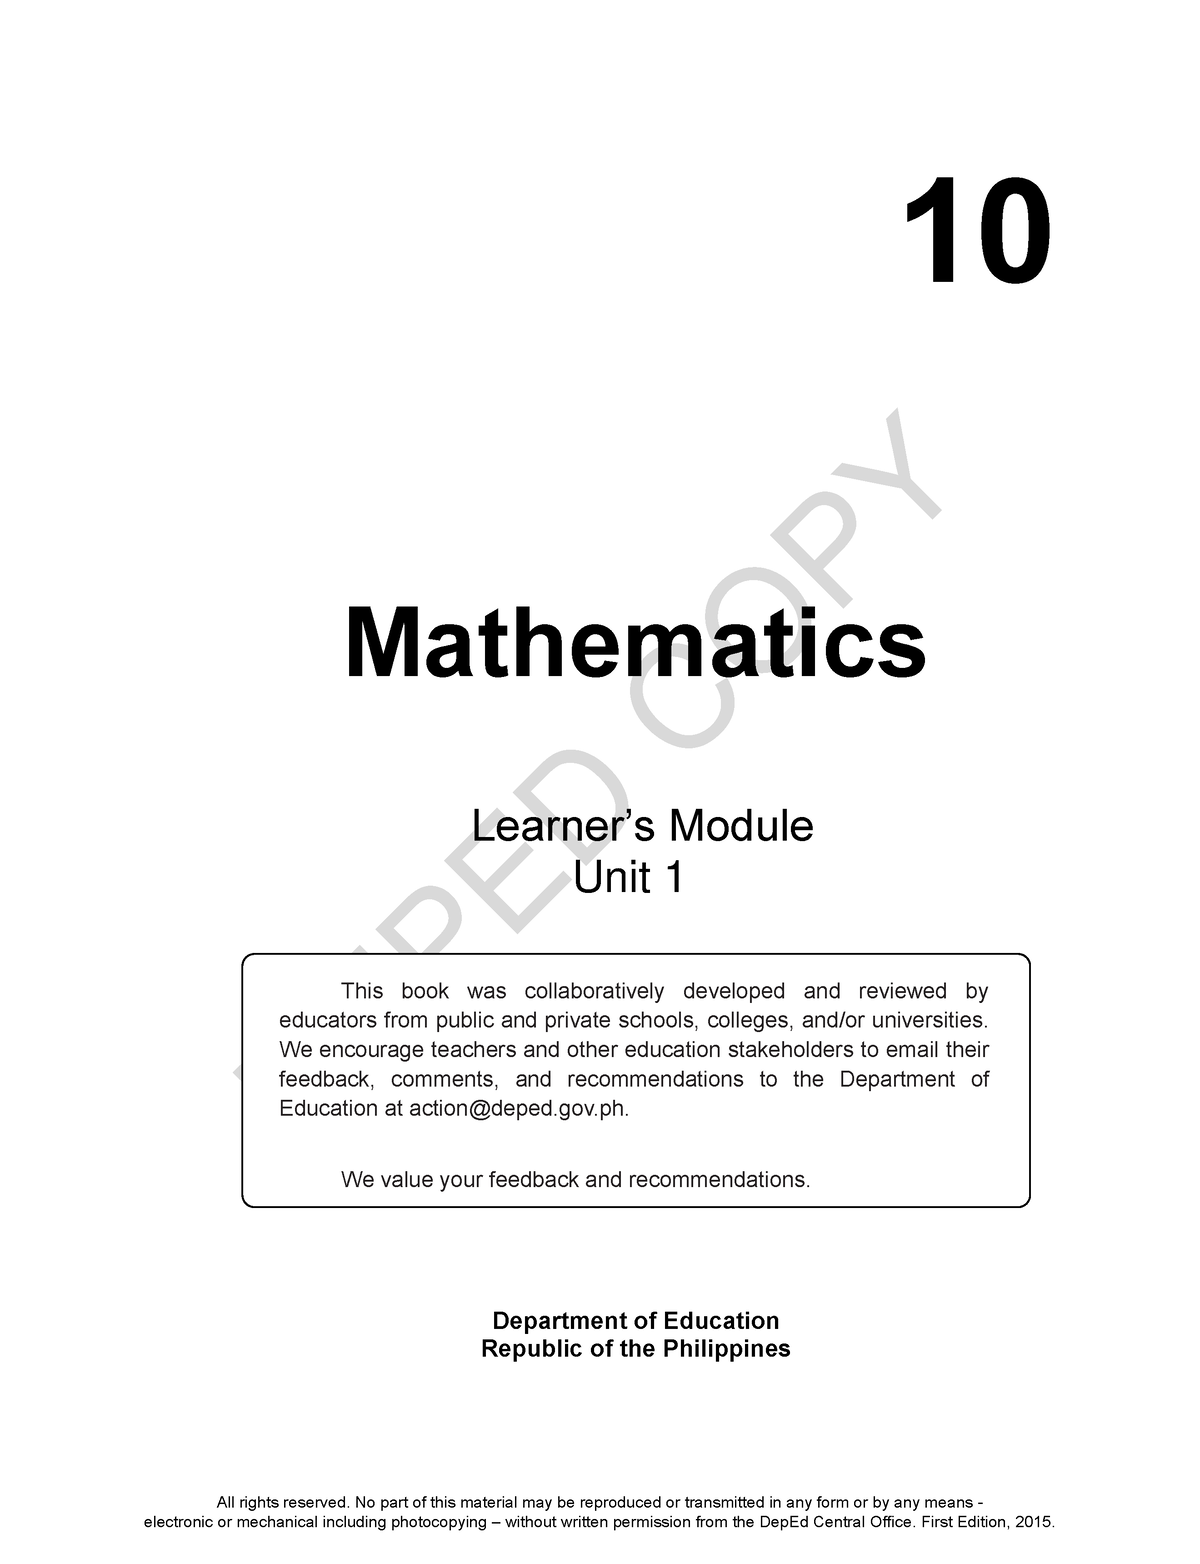 grade-10-lm-math-10-quarter-1-deped-copy-10-mathematics-department